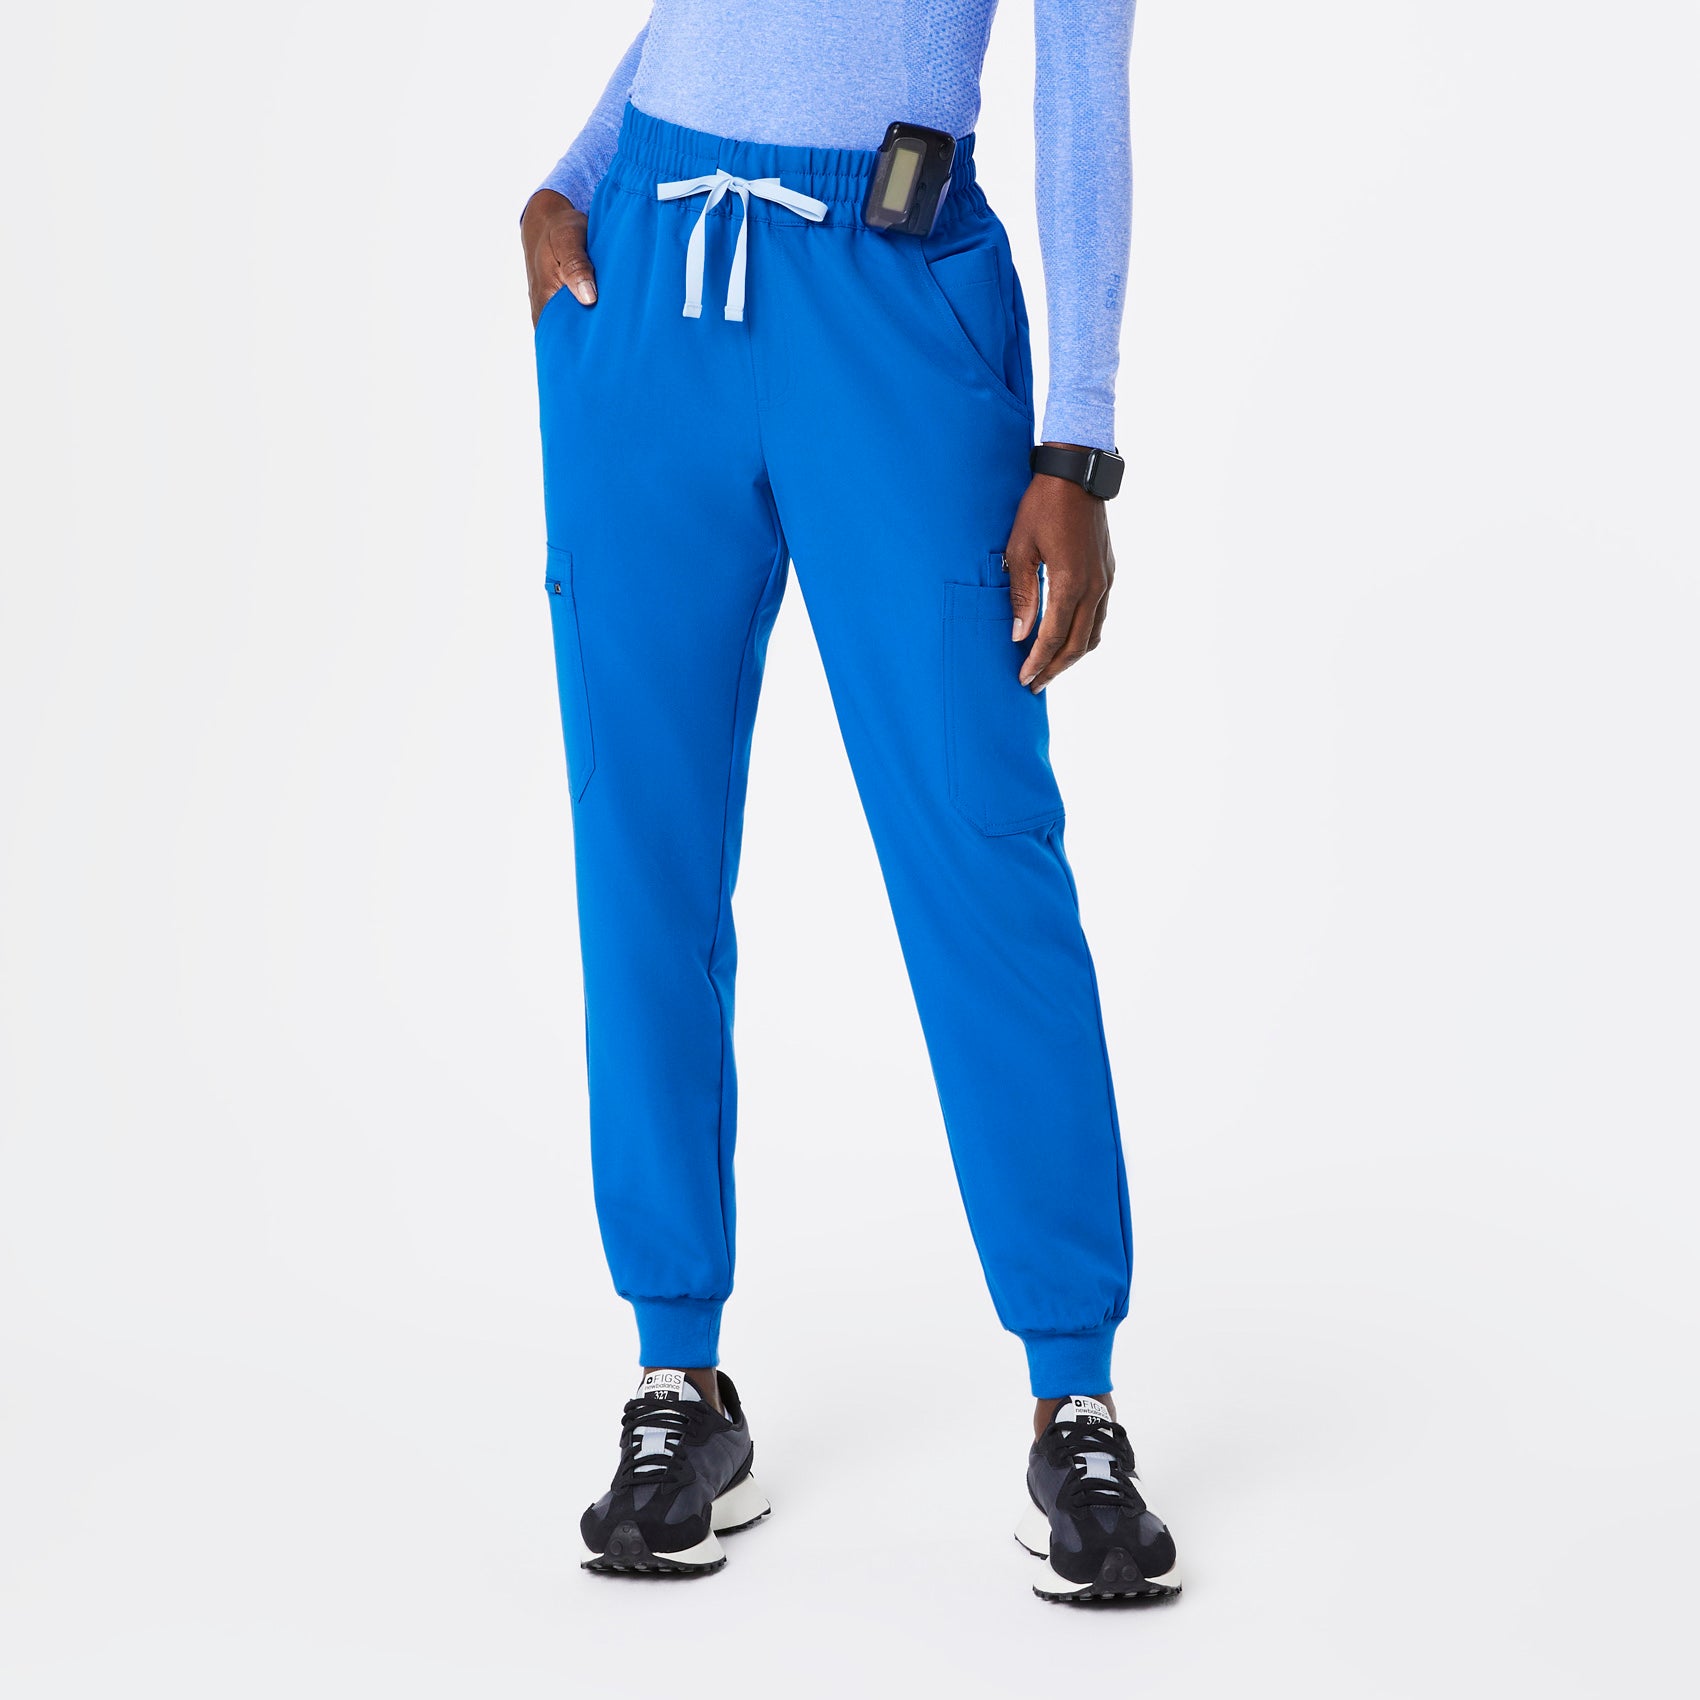 Track Figs Zamora Jogger Scrub Pants - Caribbean Blue - M - Tall at